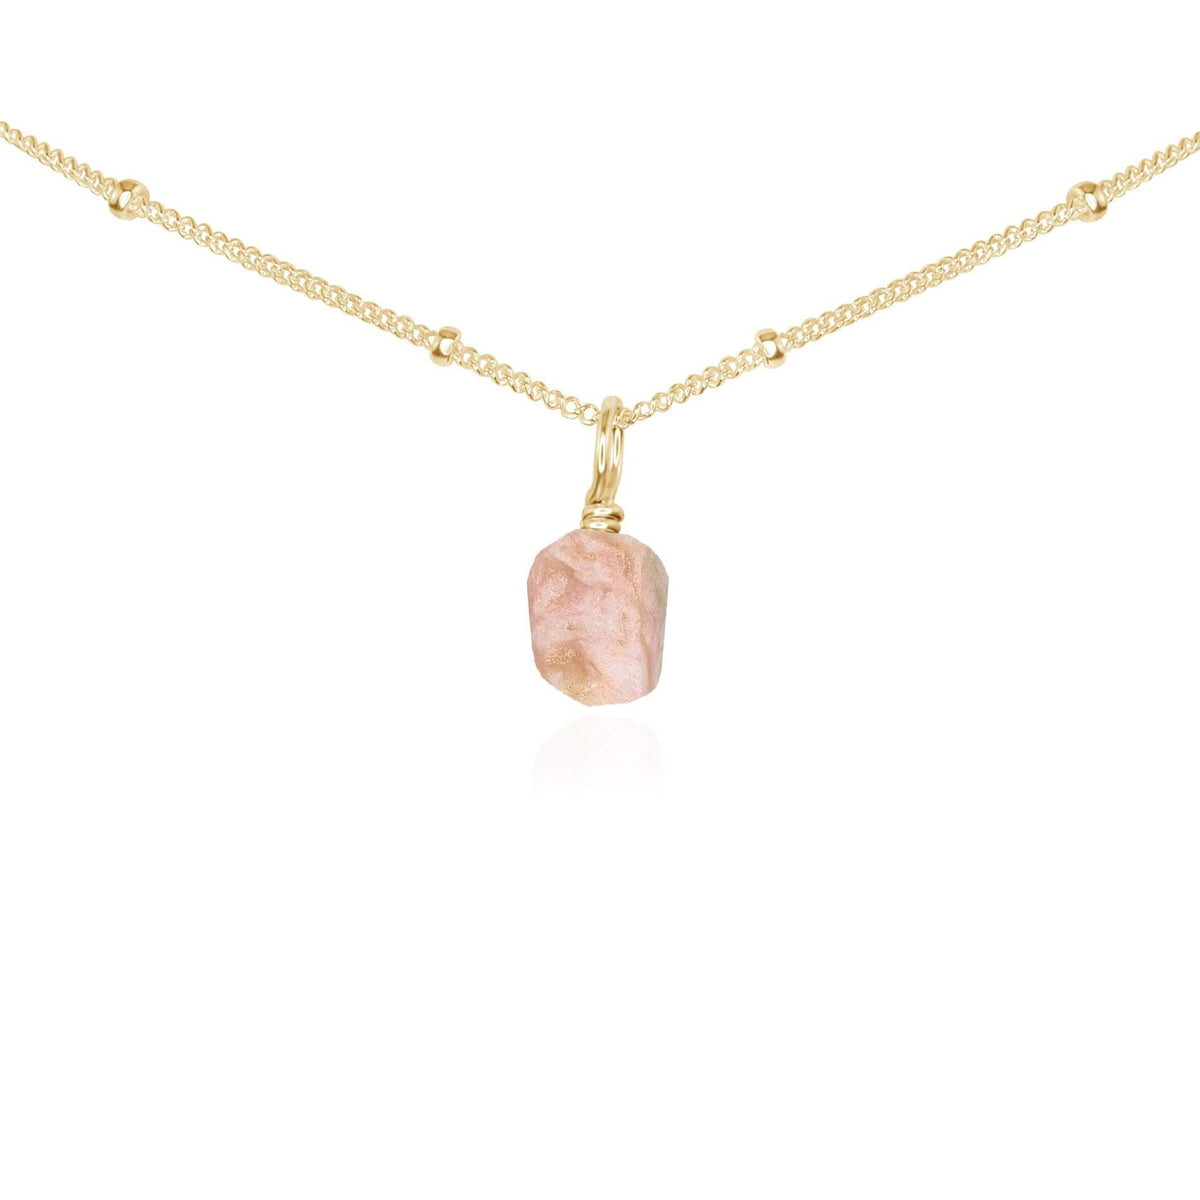 Tiny Rough Pink Peruvian Opal Gemstone Pendant Choker - Tiny Rough Pink Peruvian Opal Gemstone Pendant Choker - 14k Gold Fill / Satellite - Luna Tide Handmade Crystal Jewellery